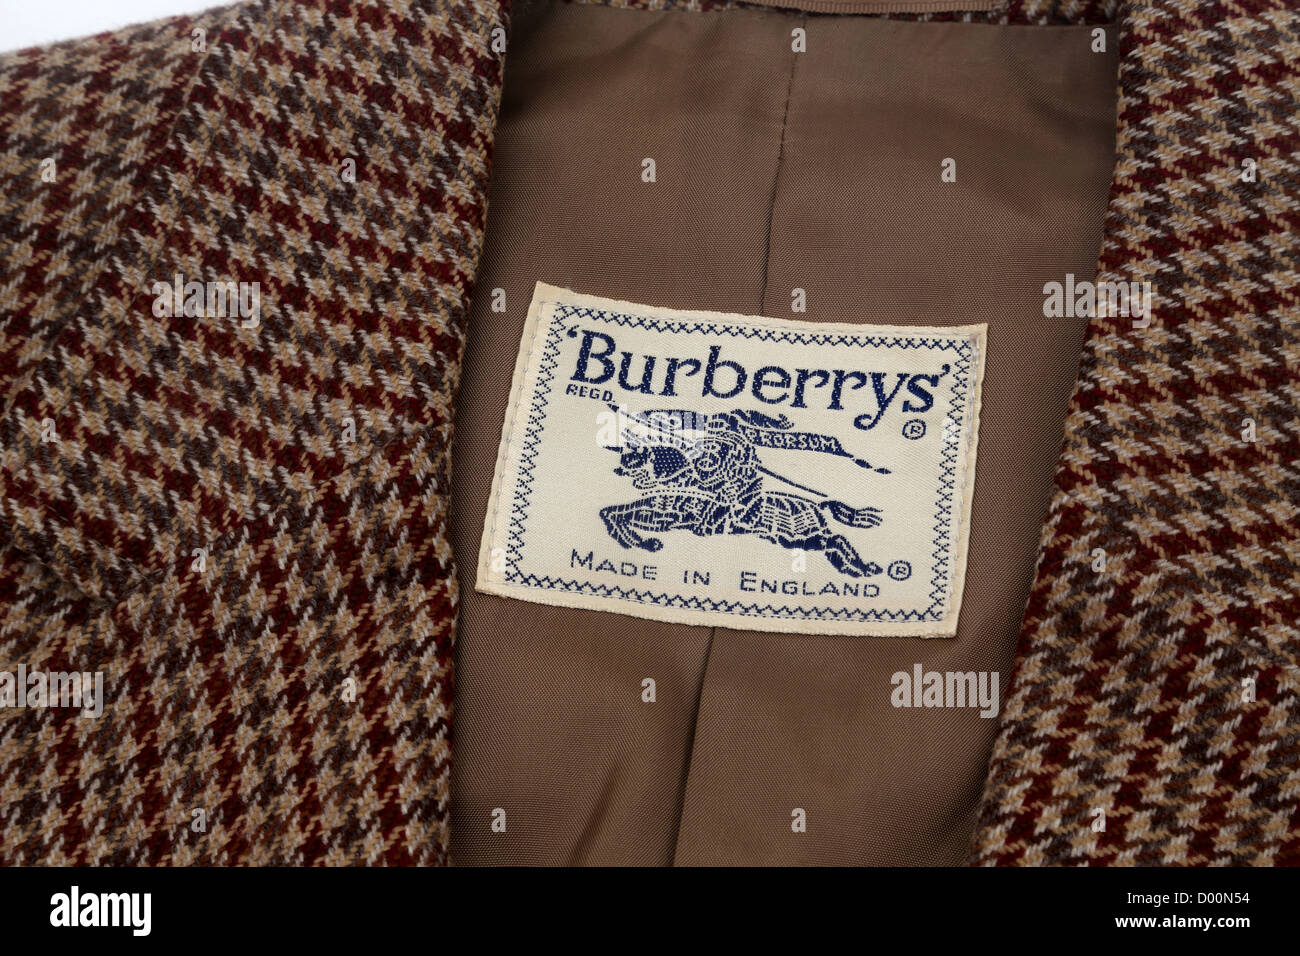 Burberry's Jacket Label -Logo Equestrian Knight Stock Photo - Alamy